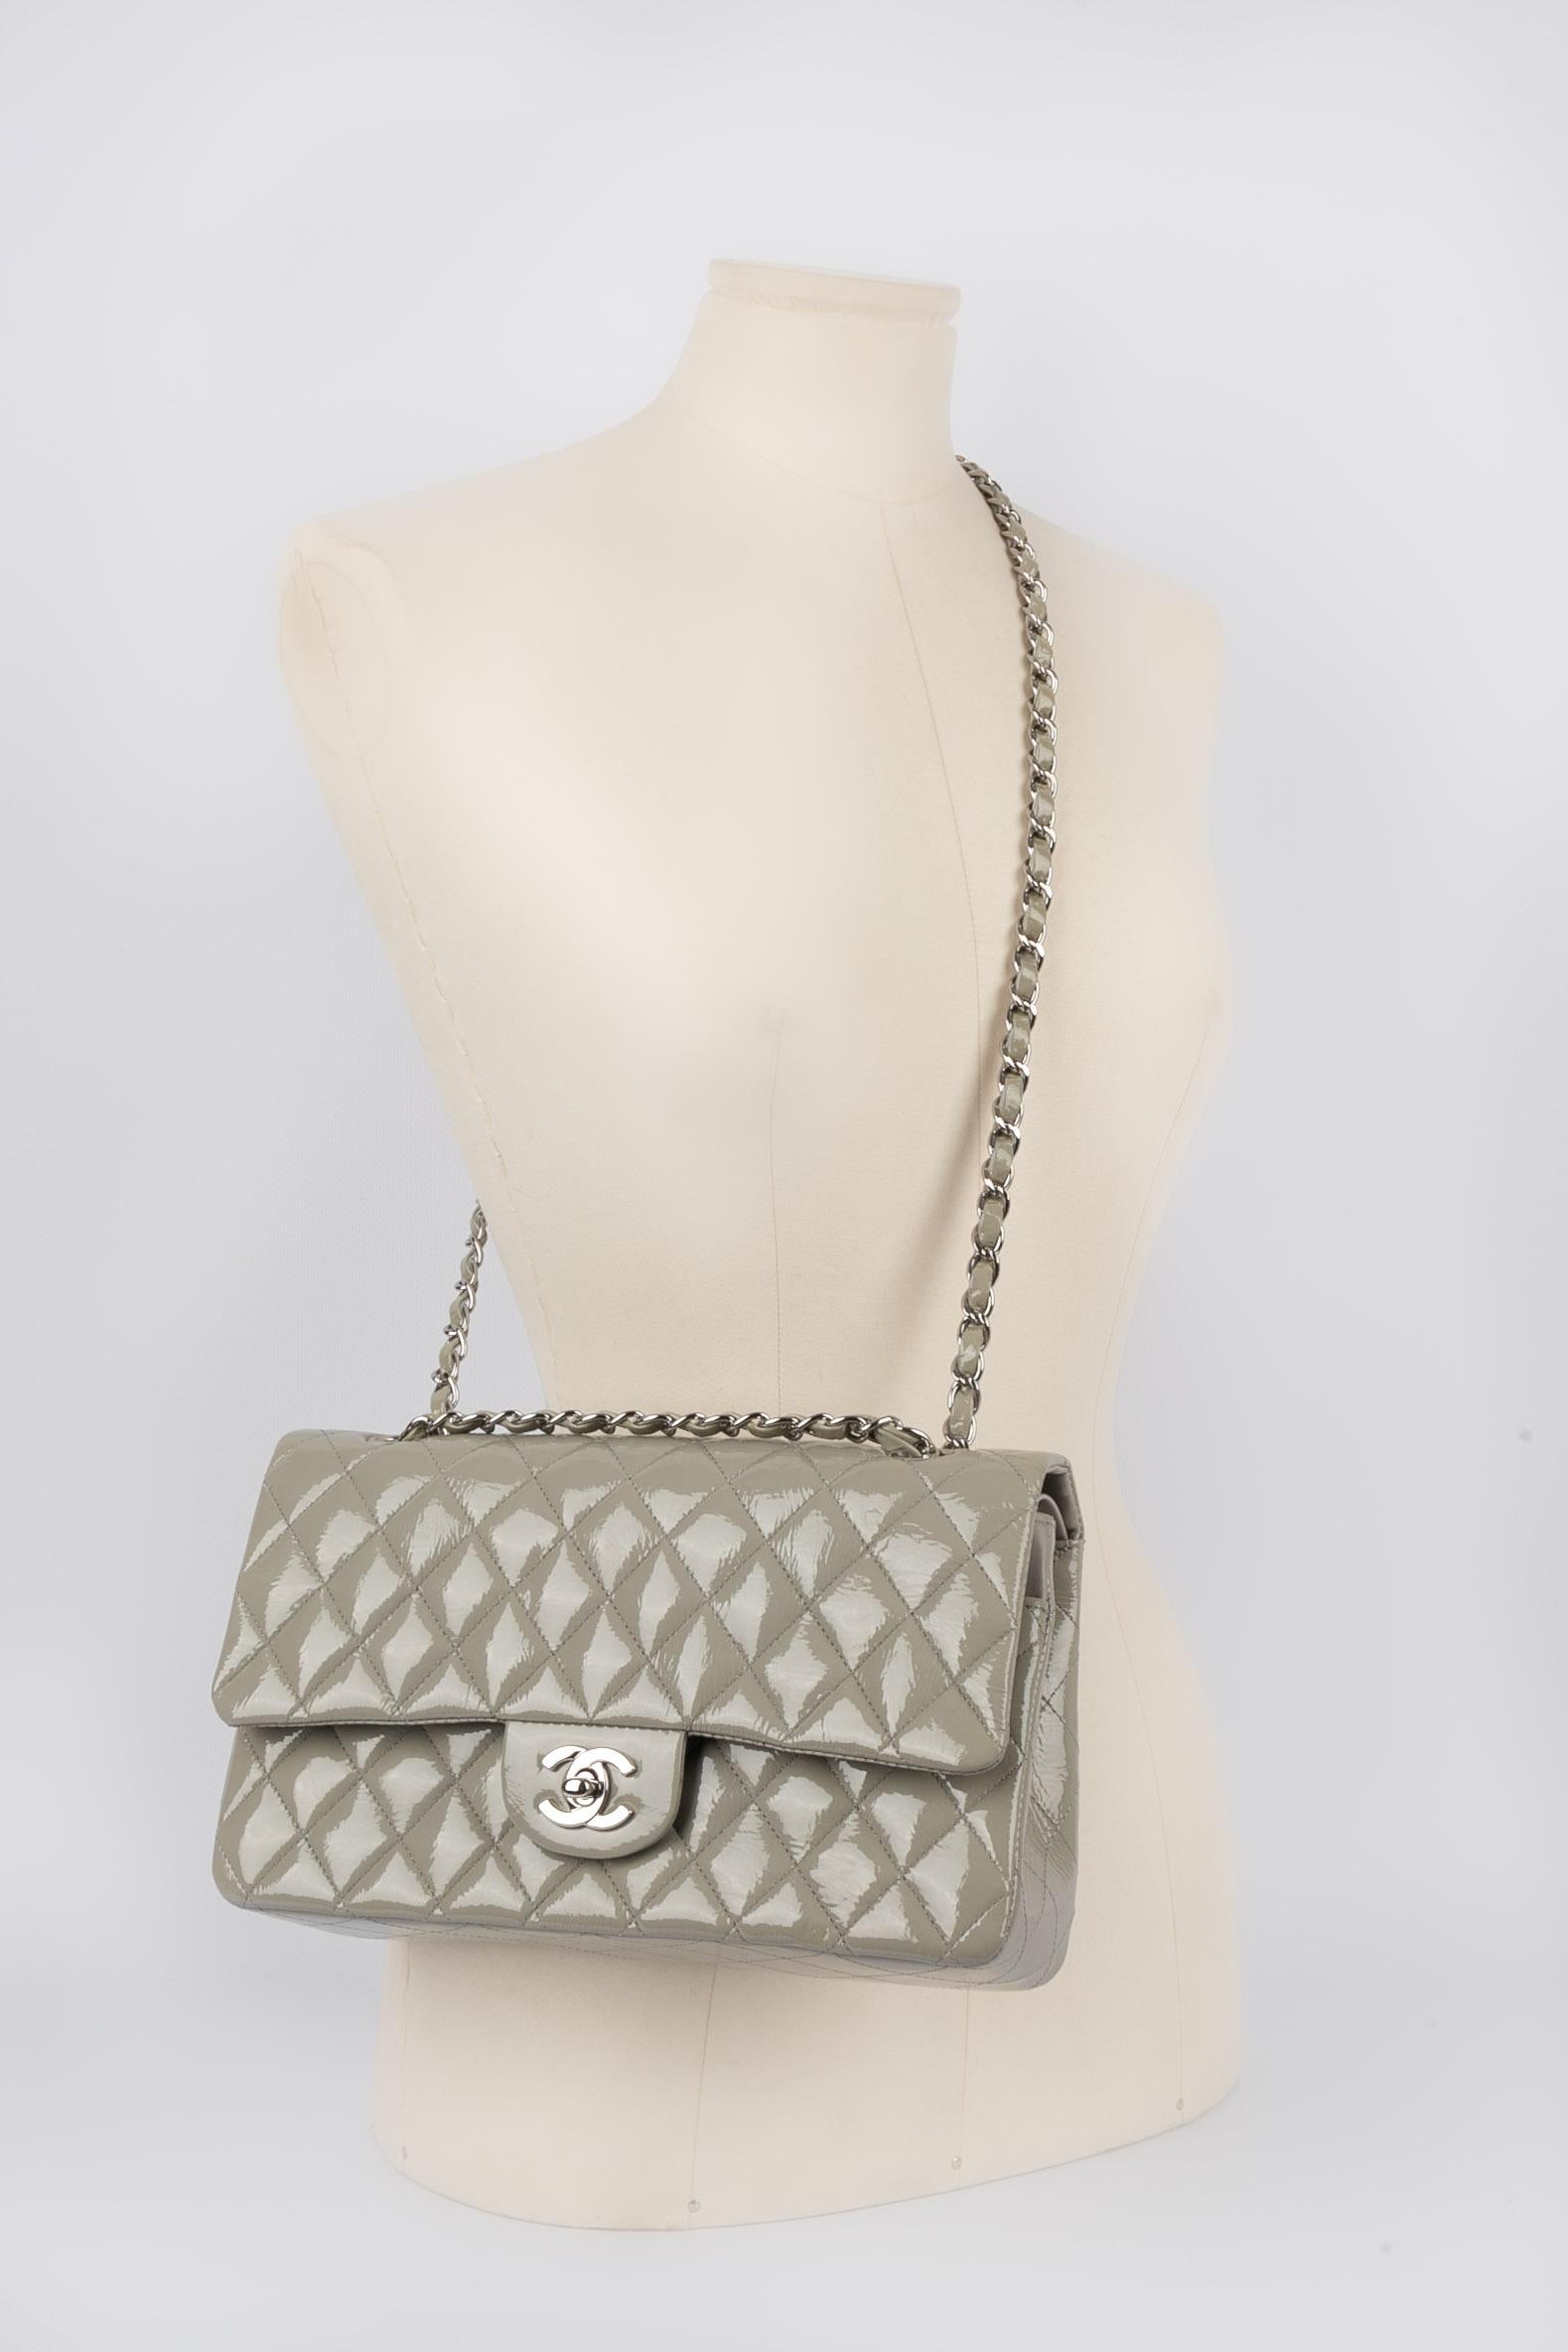 Chanel bag 2008/2009 For Sale 9